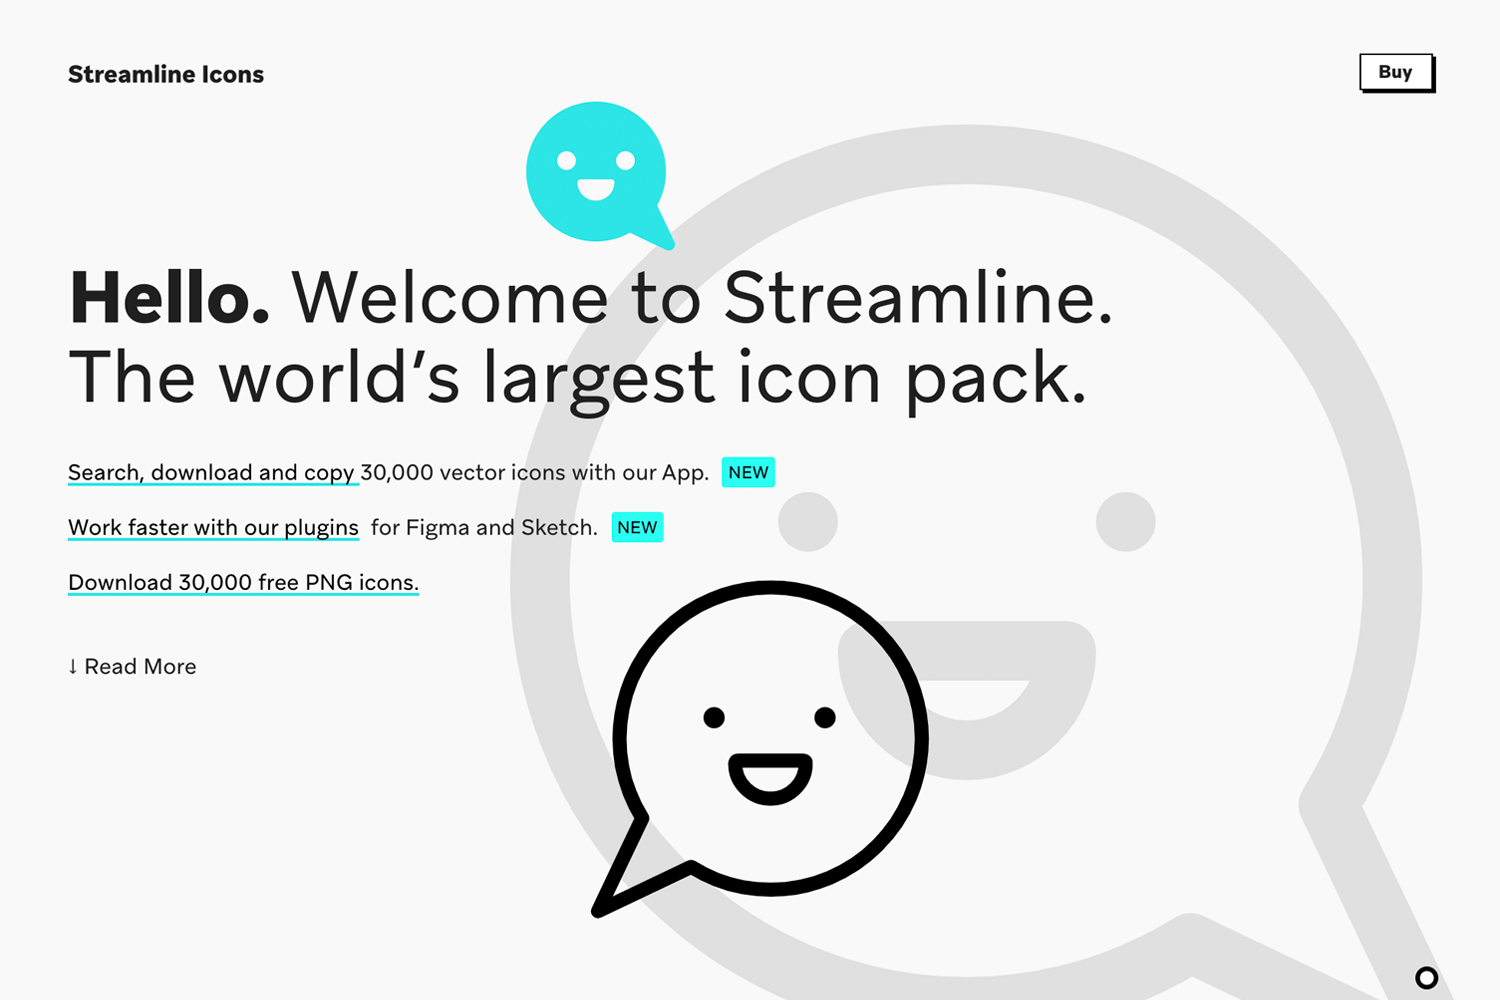 sgtreamline as design blog for free icons